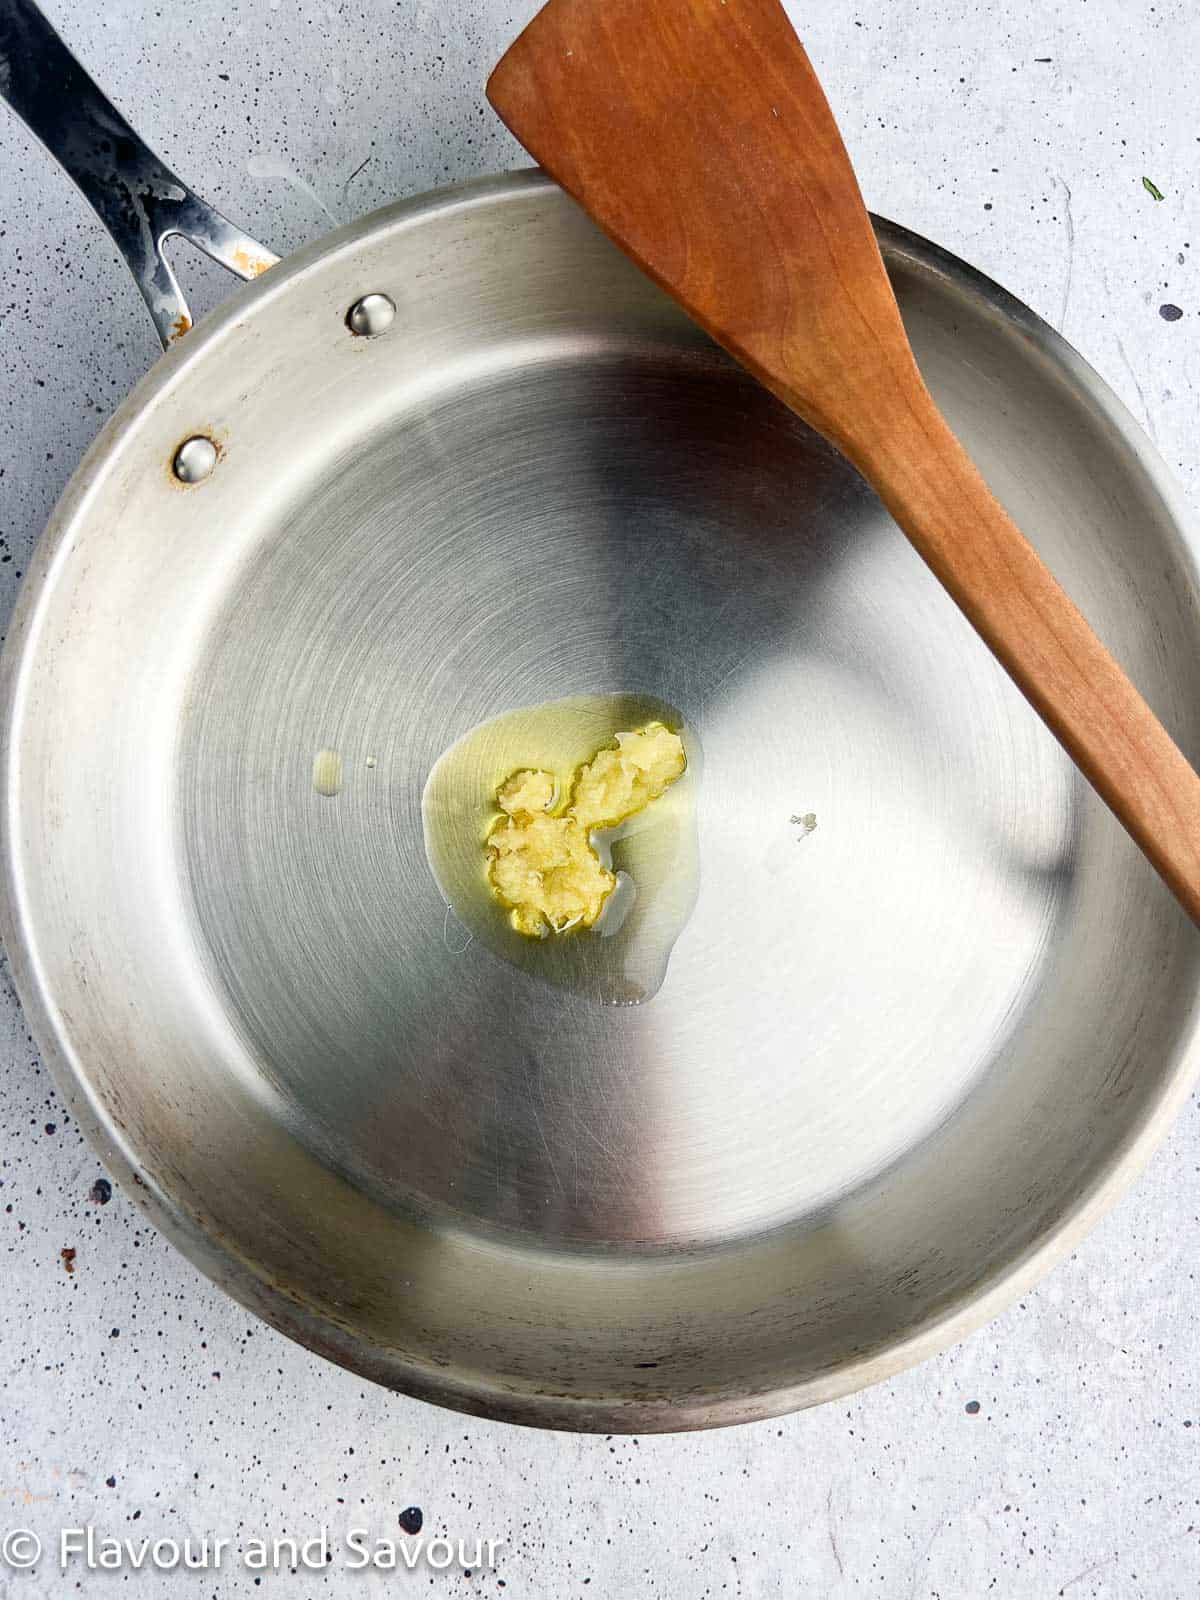 Minced garlic in oil in a skillet.